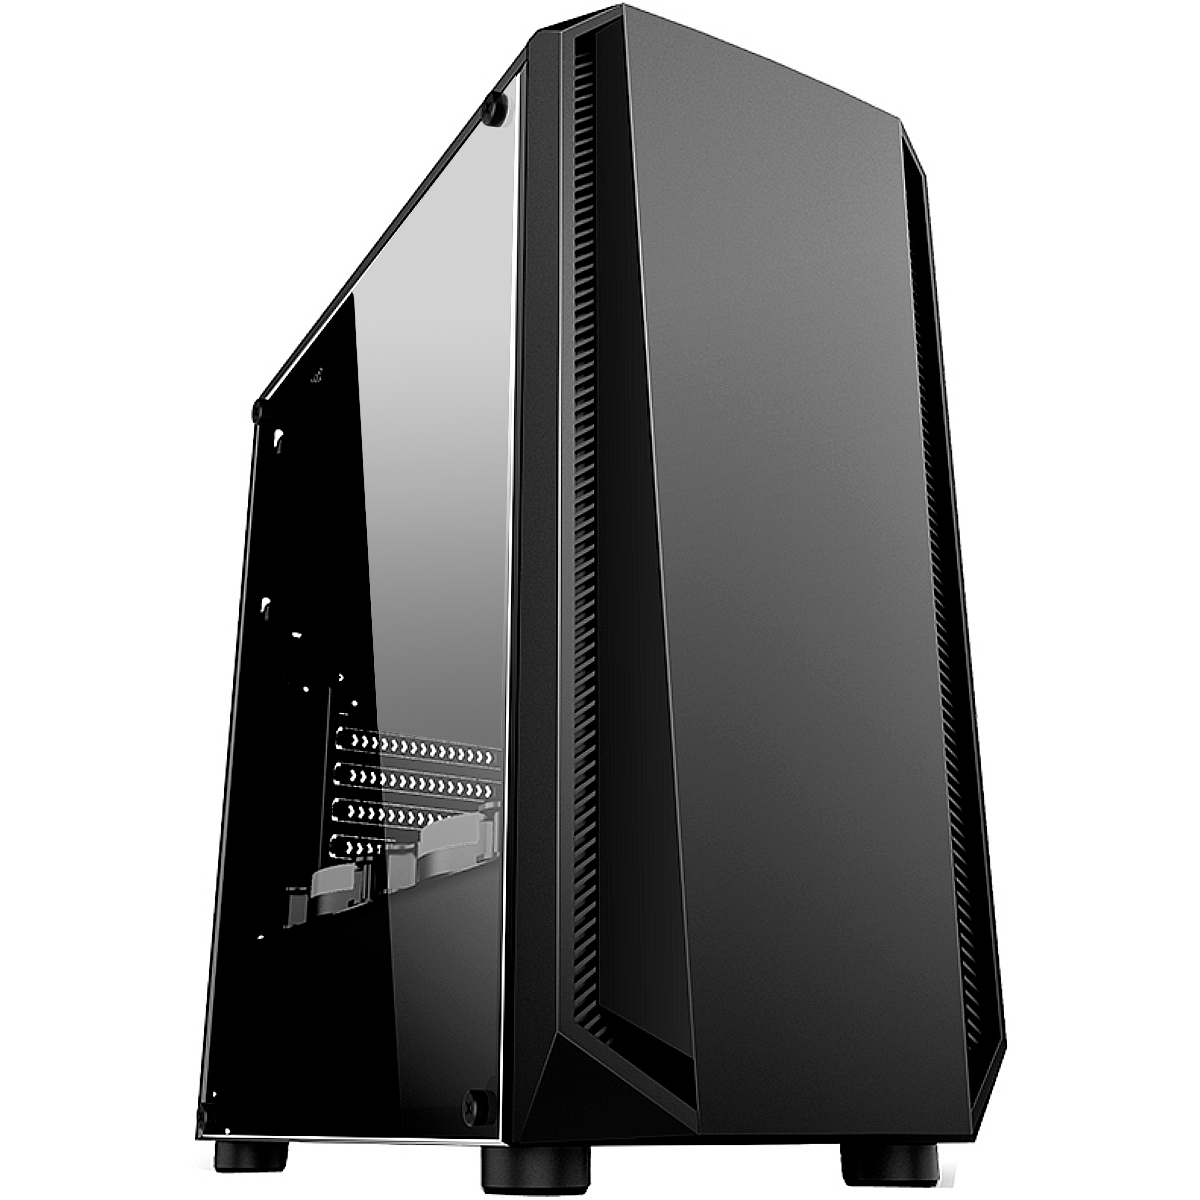 PC Gamer Ryzen 3600X - Asus Prime A320M-K/BR, 16GB DDR4 (2x8GB), SSD 240GB, GeForce RTX 2060